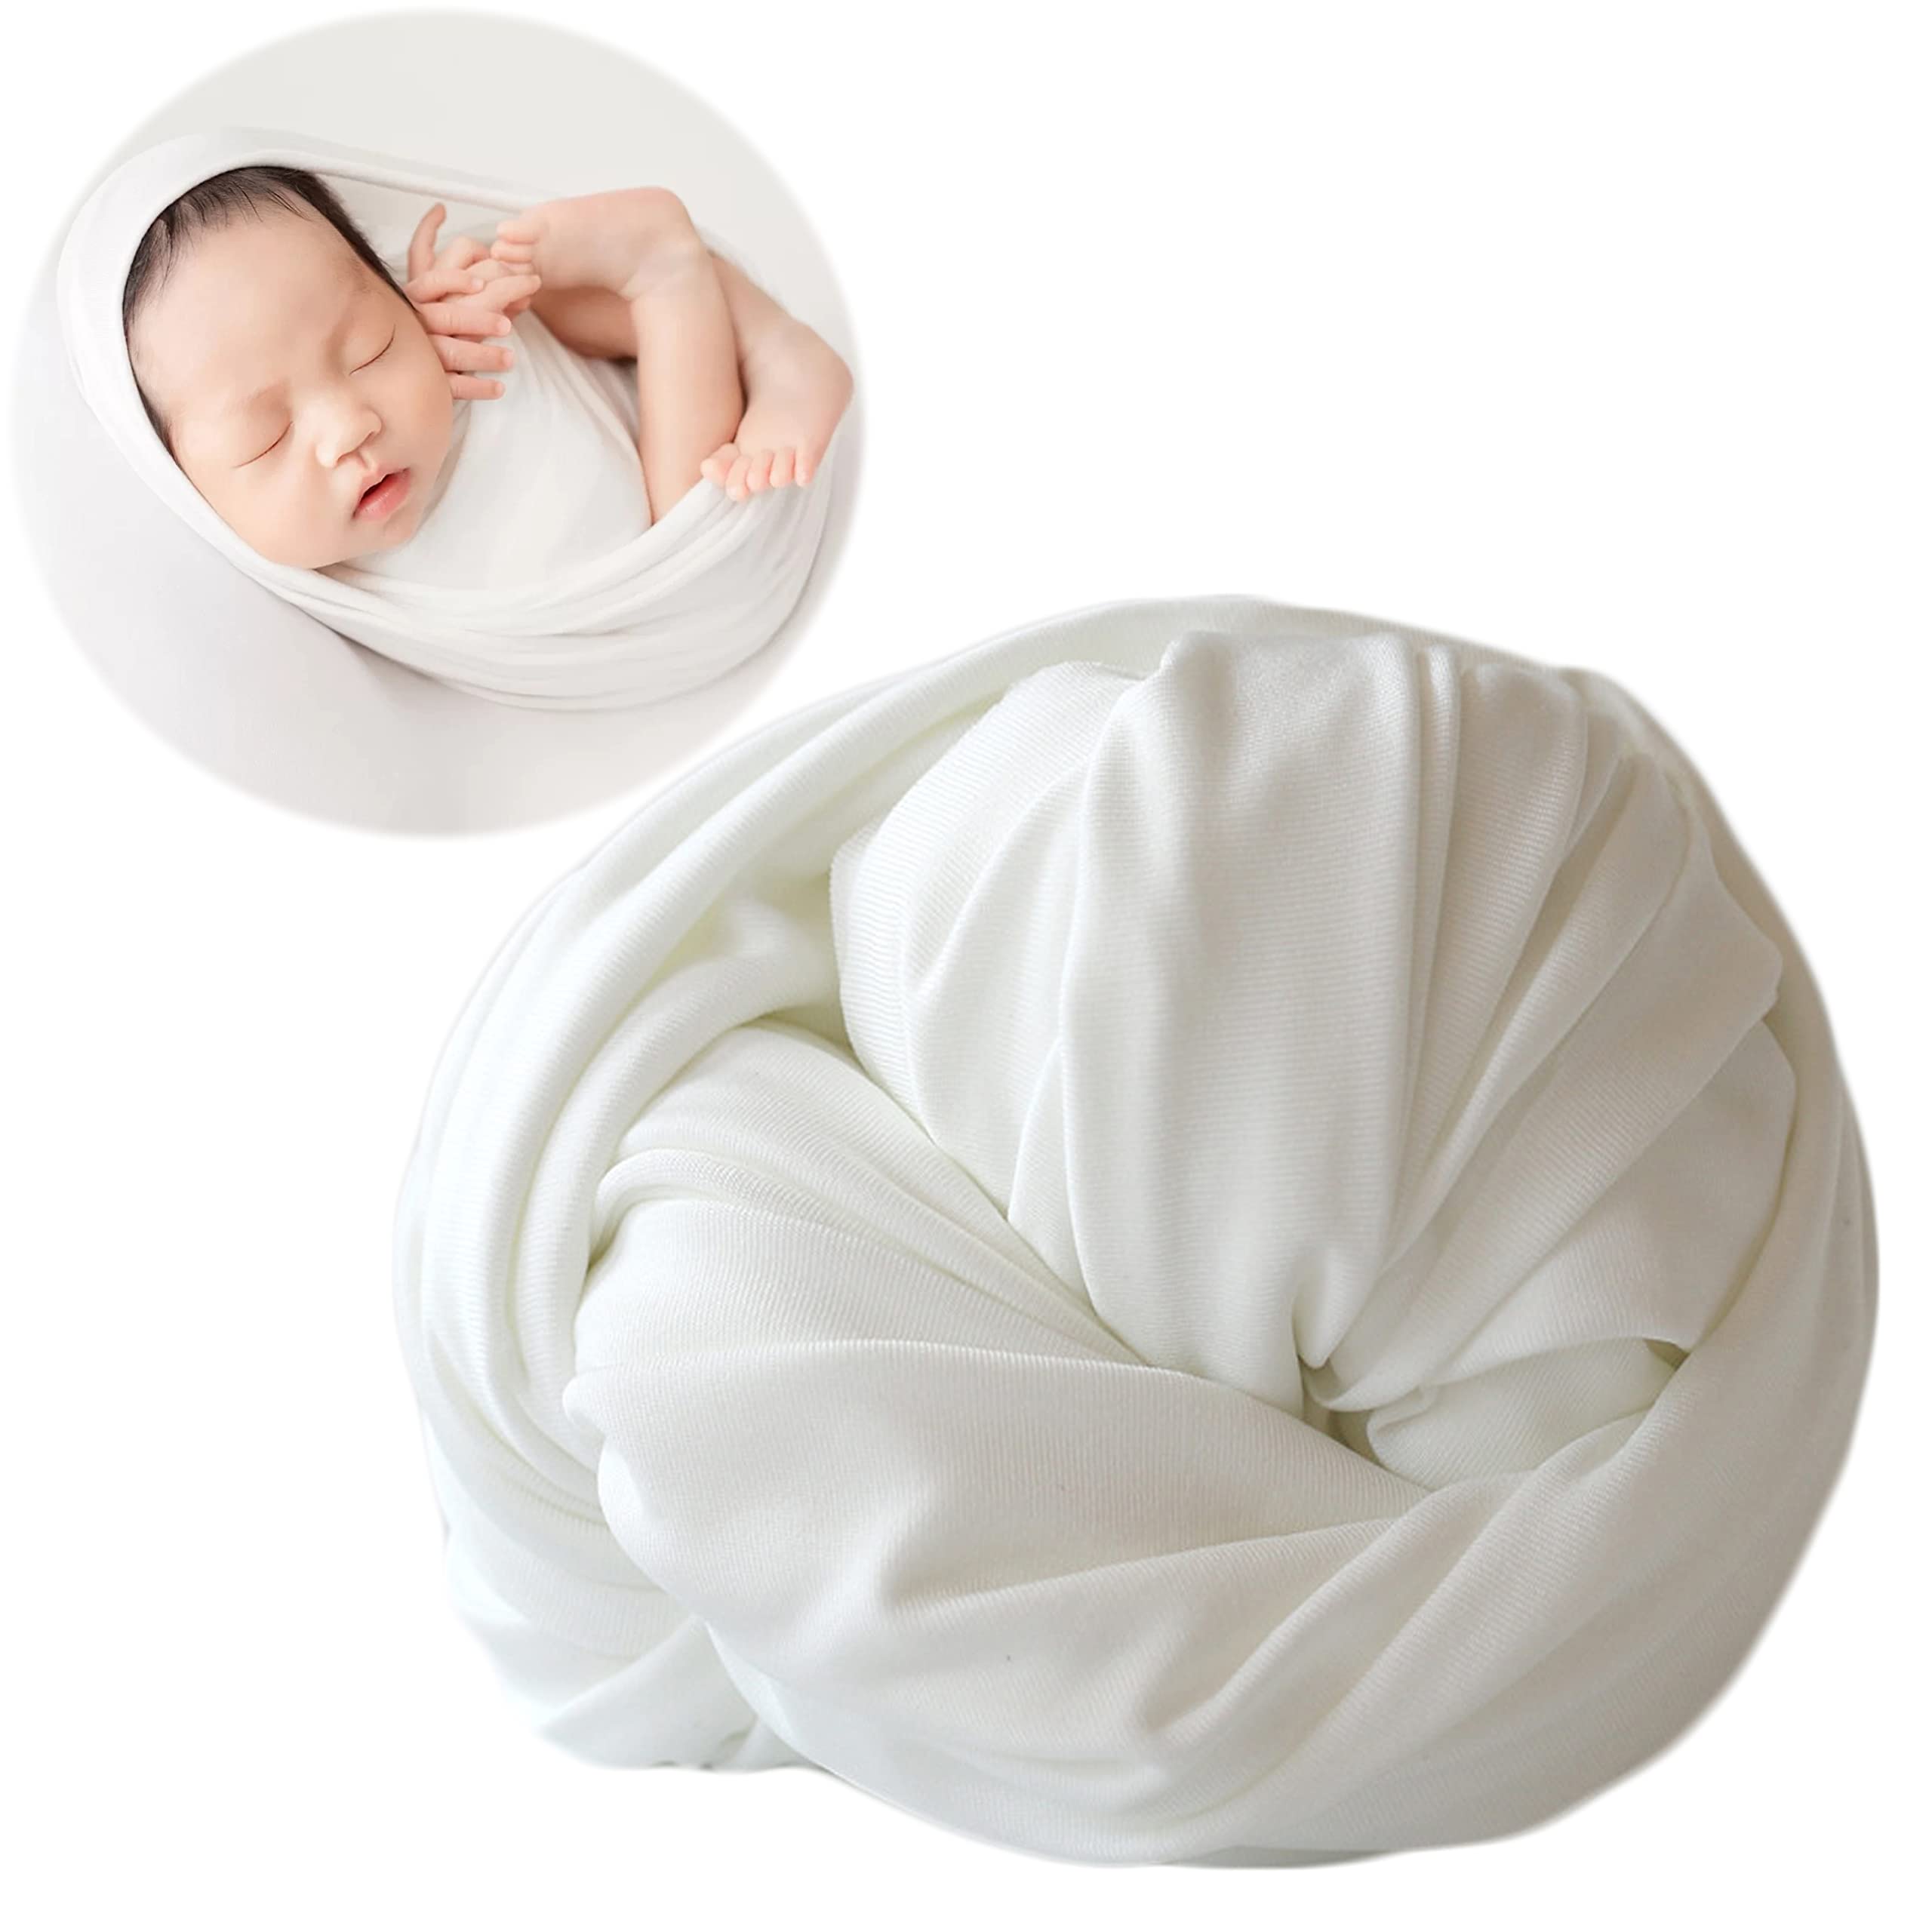 Zeroest Newborn Photography Stretch Wrap Boy girl Baby Wraps Photography Props Baby Photo Prop Stretch Blanket for Baby (White)